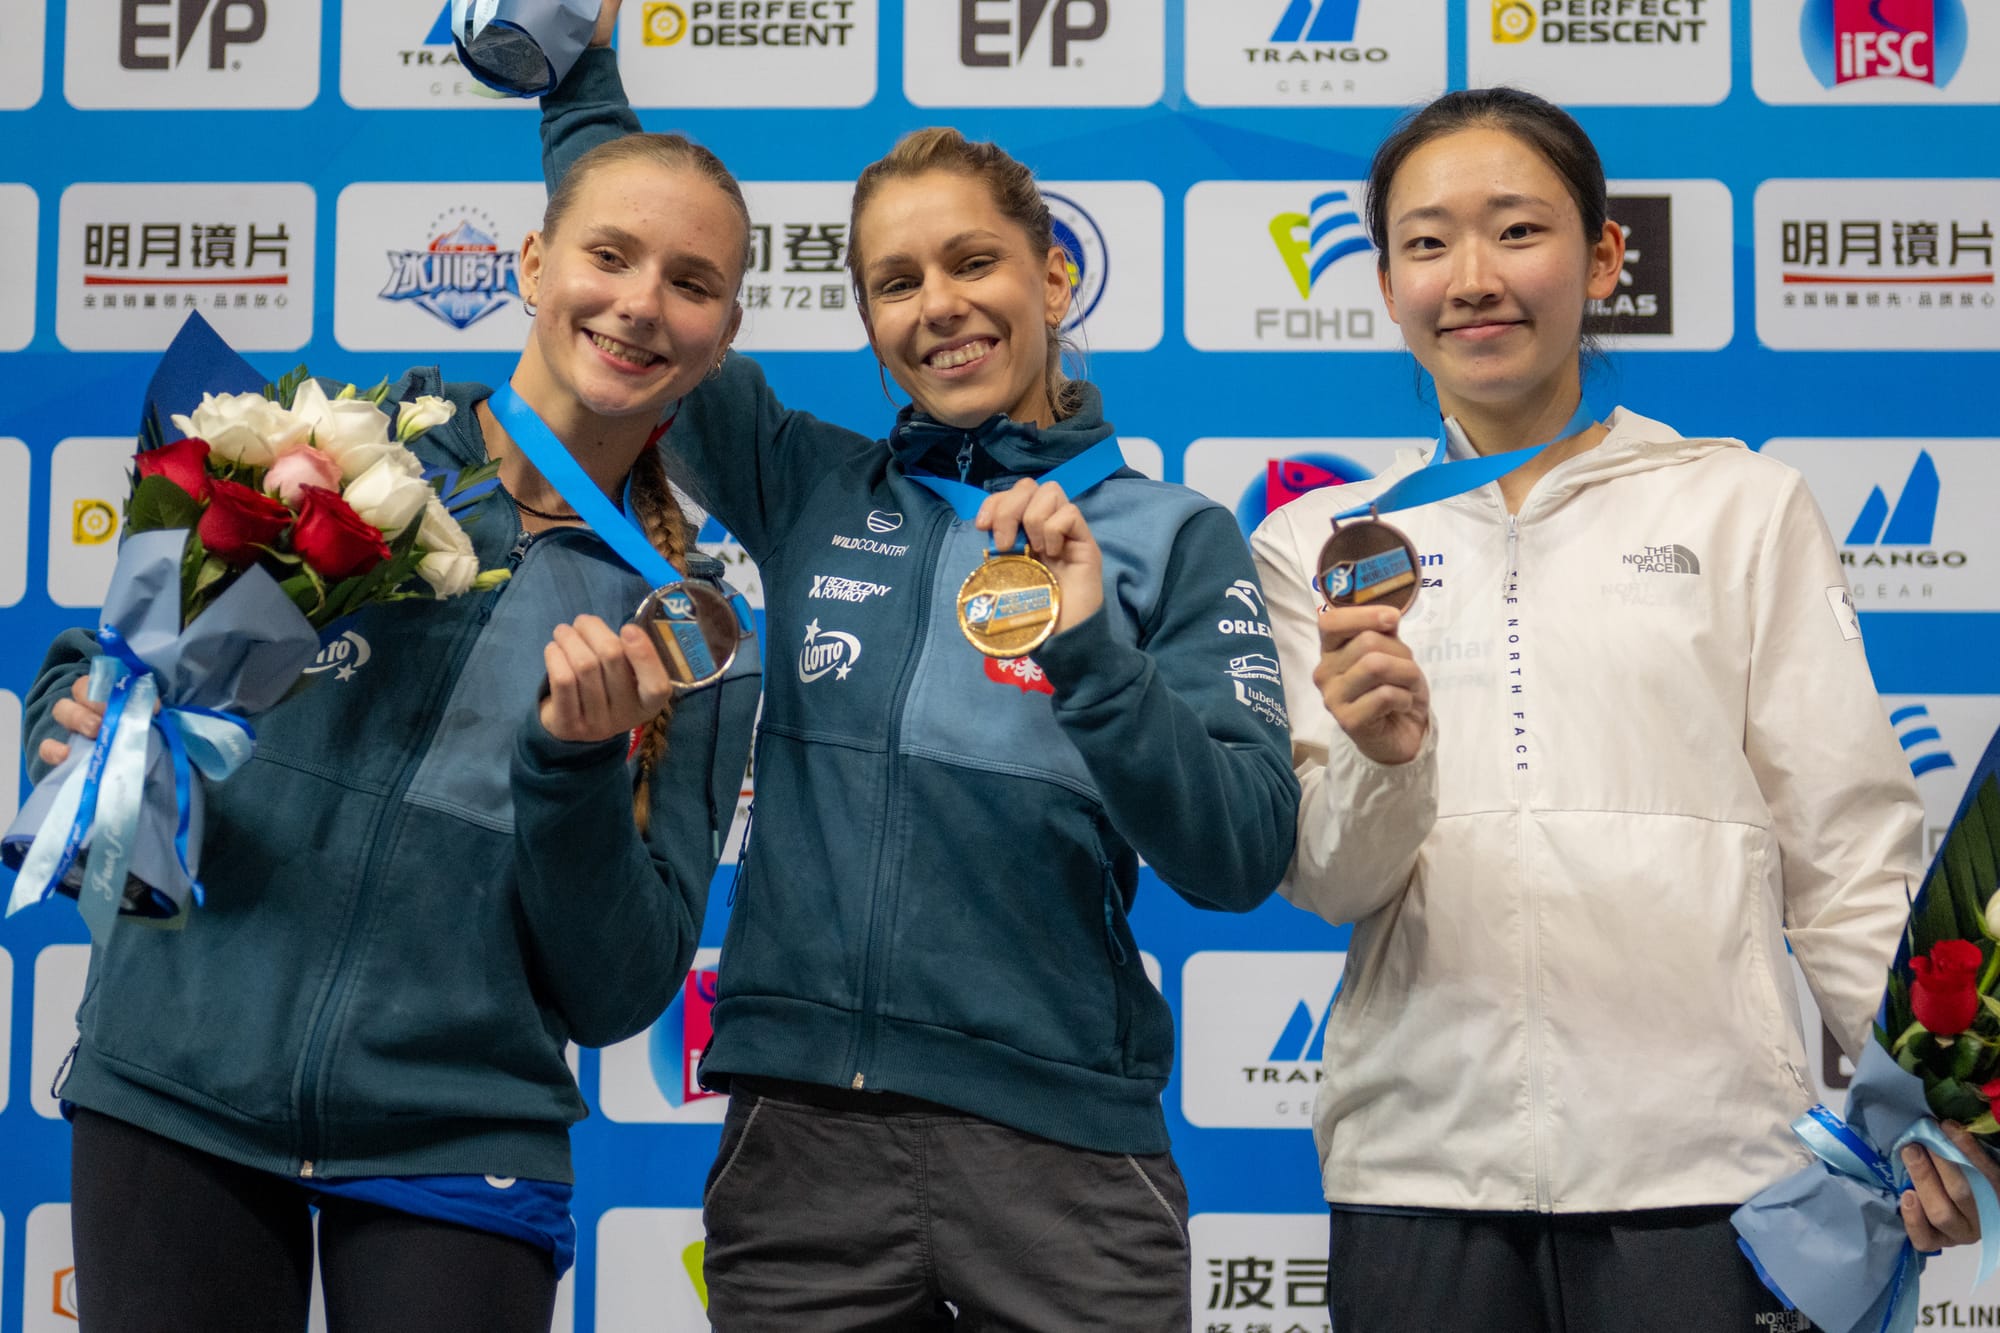 The women's podium: Ola Miroslaw, Natalia Kalucka, and Jimin Jeong celebrating with their medals.